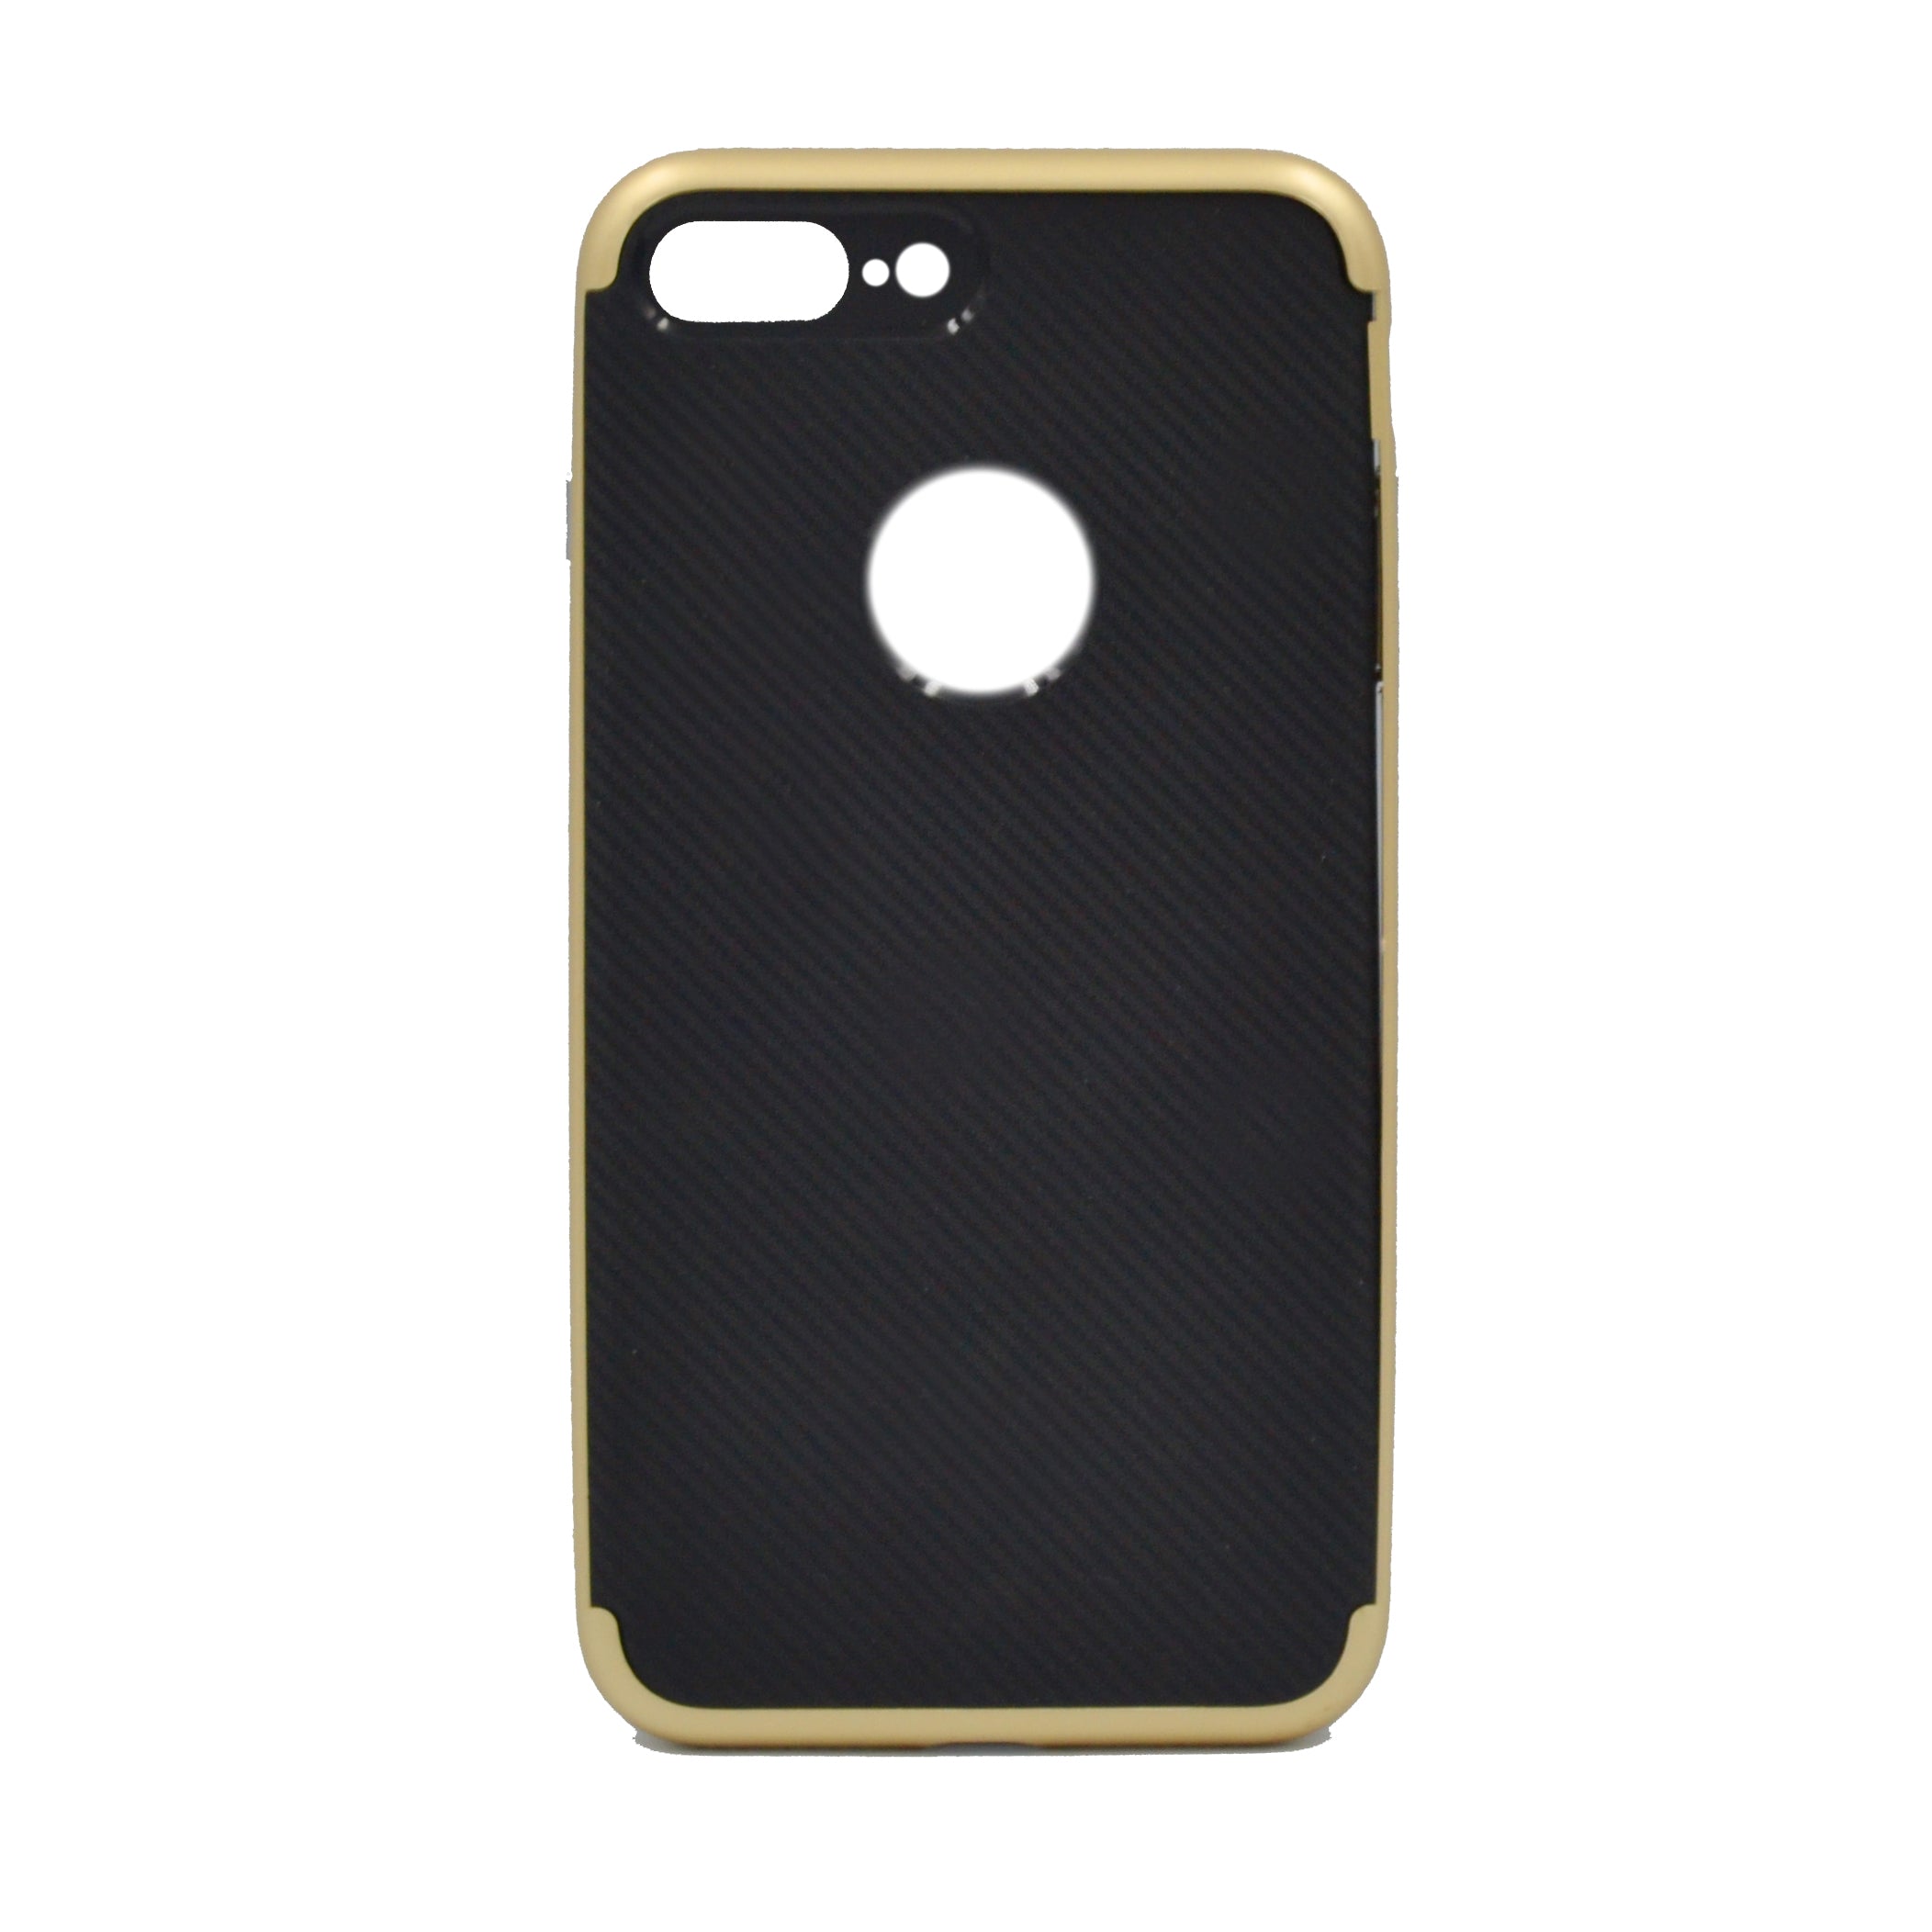 iSecret Protective Mobile Case iPhone 7 Plus - Gold